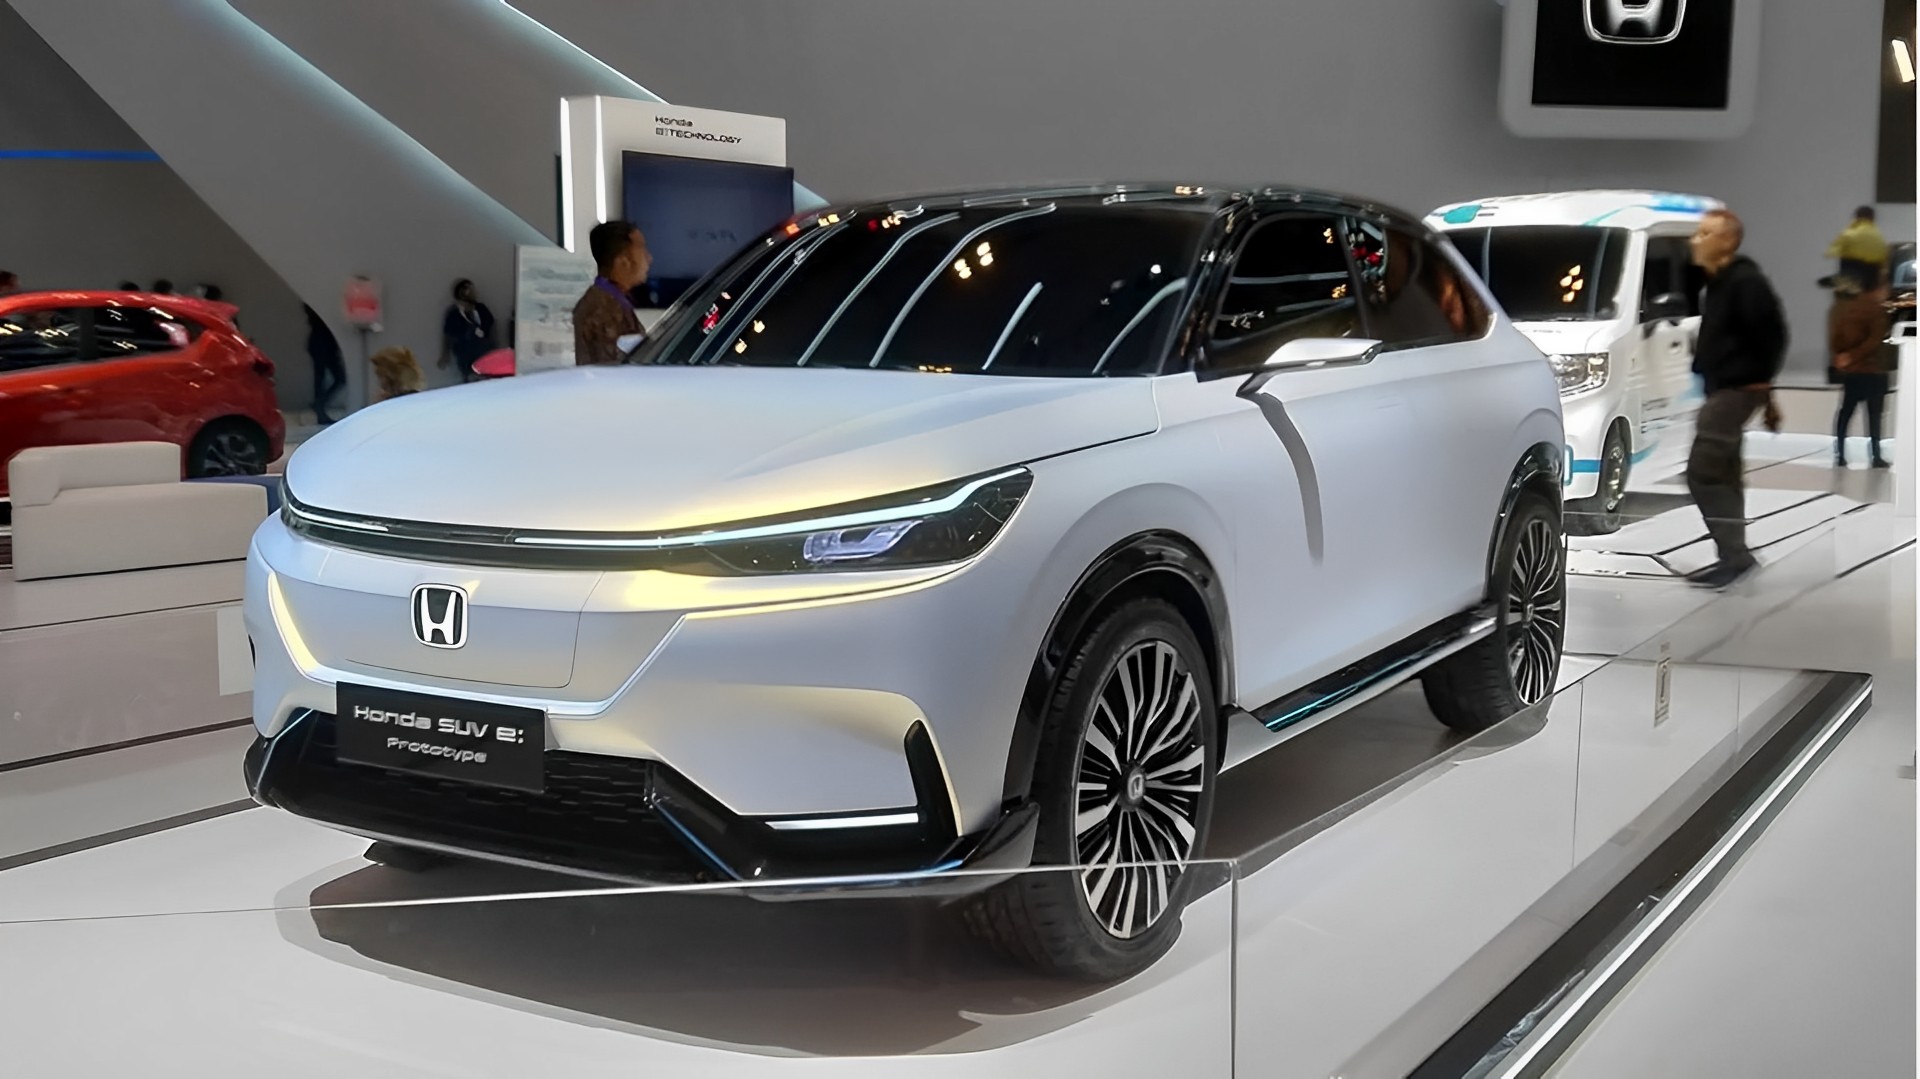 Honda Unveils SUV e: Prototype at the Indonesia Auto Show